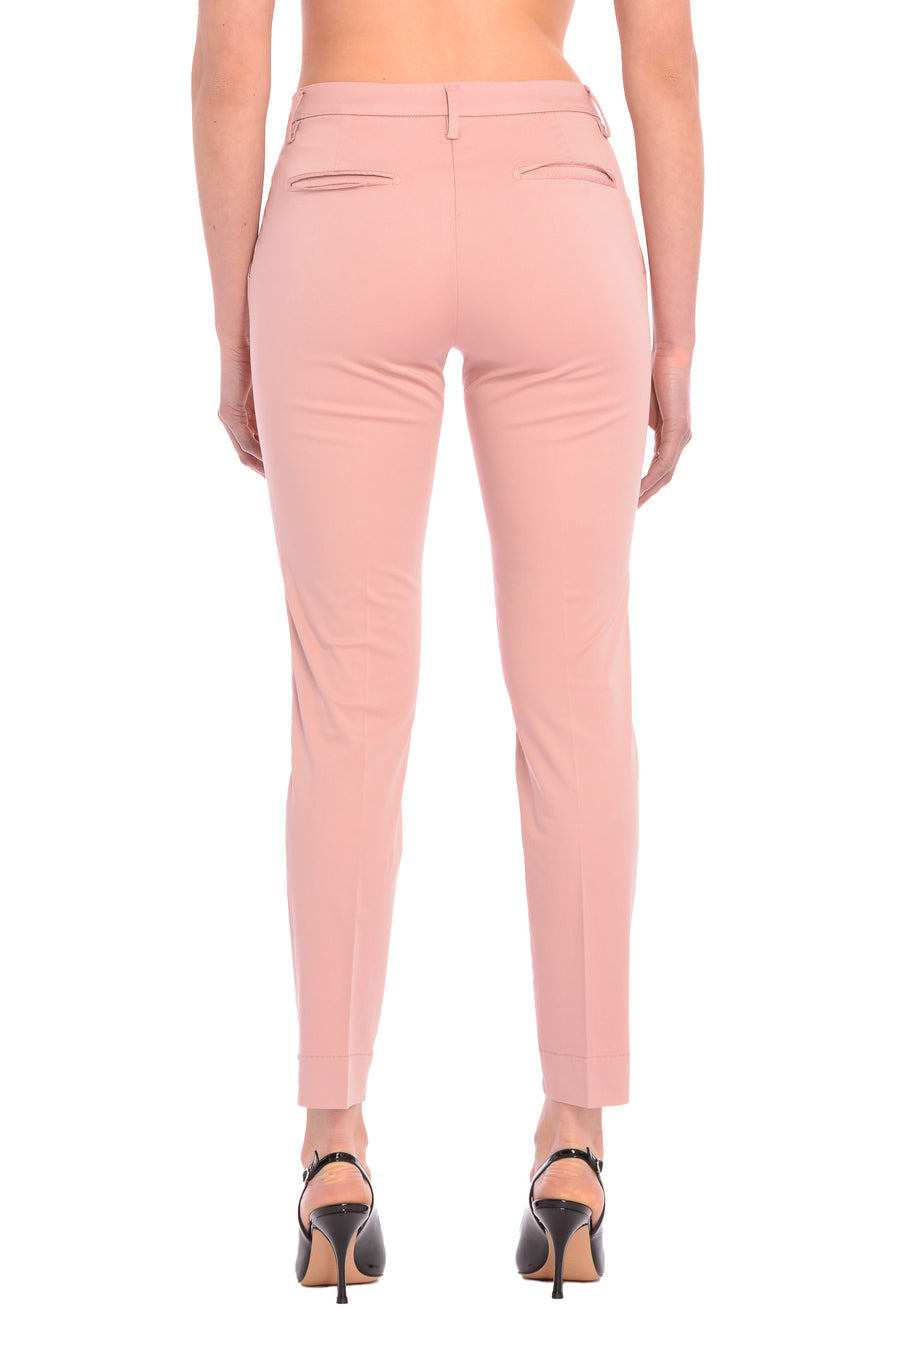 Pantalone Janis rosa antico